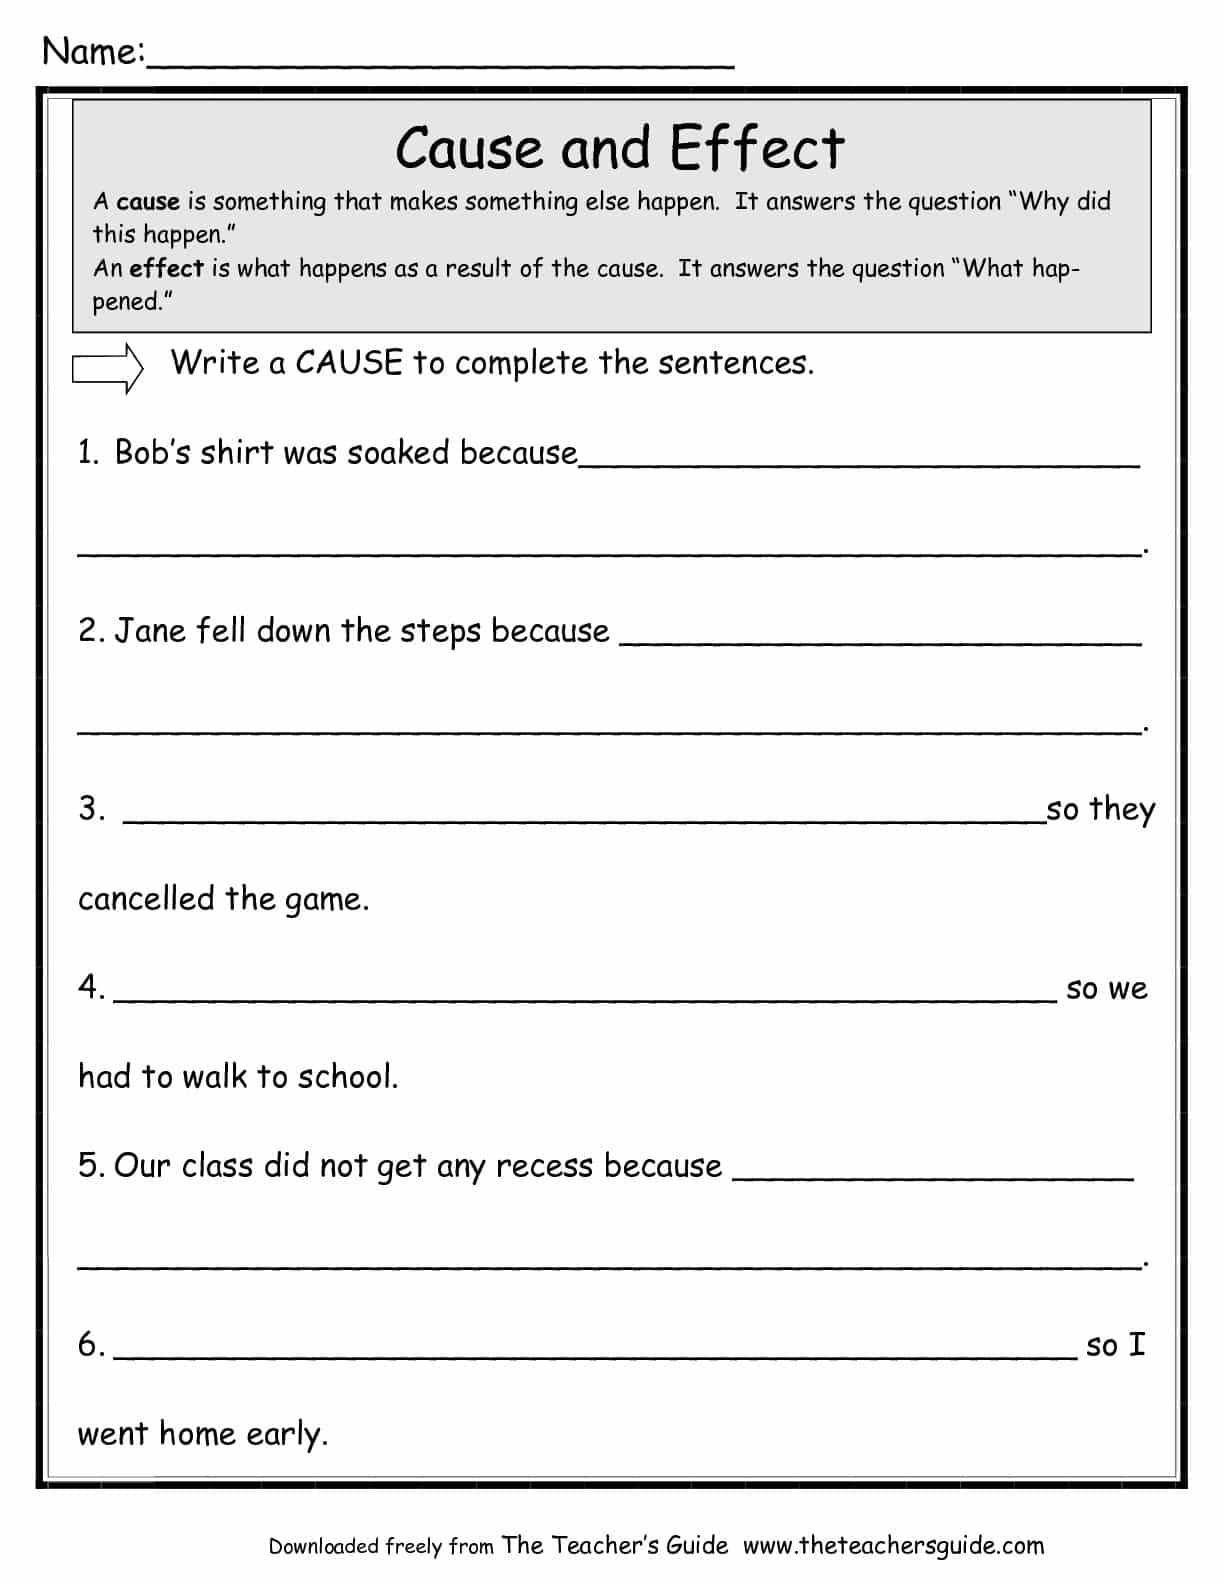 Jobs Worksheets For Kindergarten Pdf And Jobs Worksheet Elementary Pdf